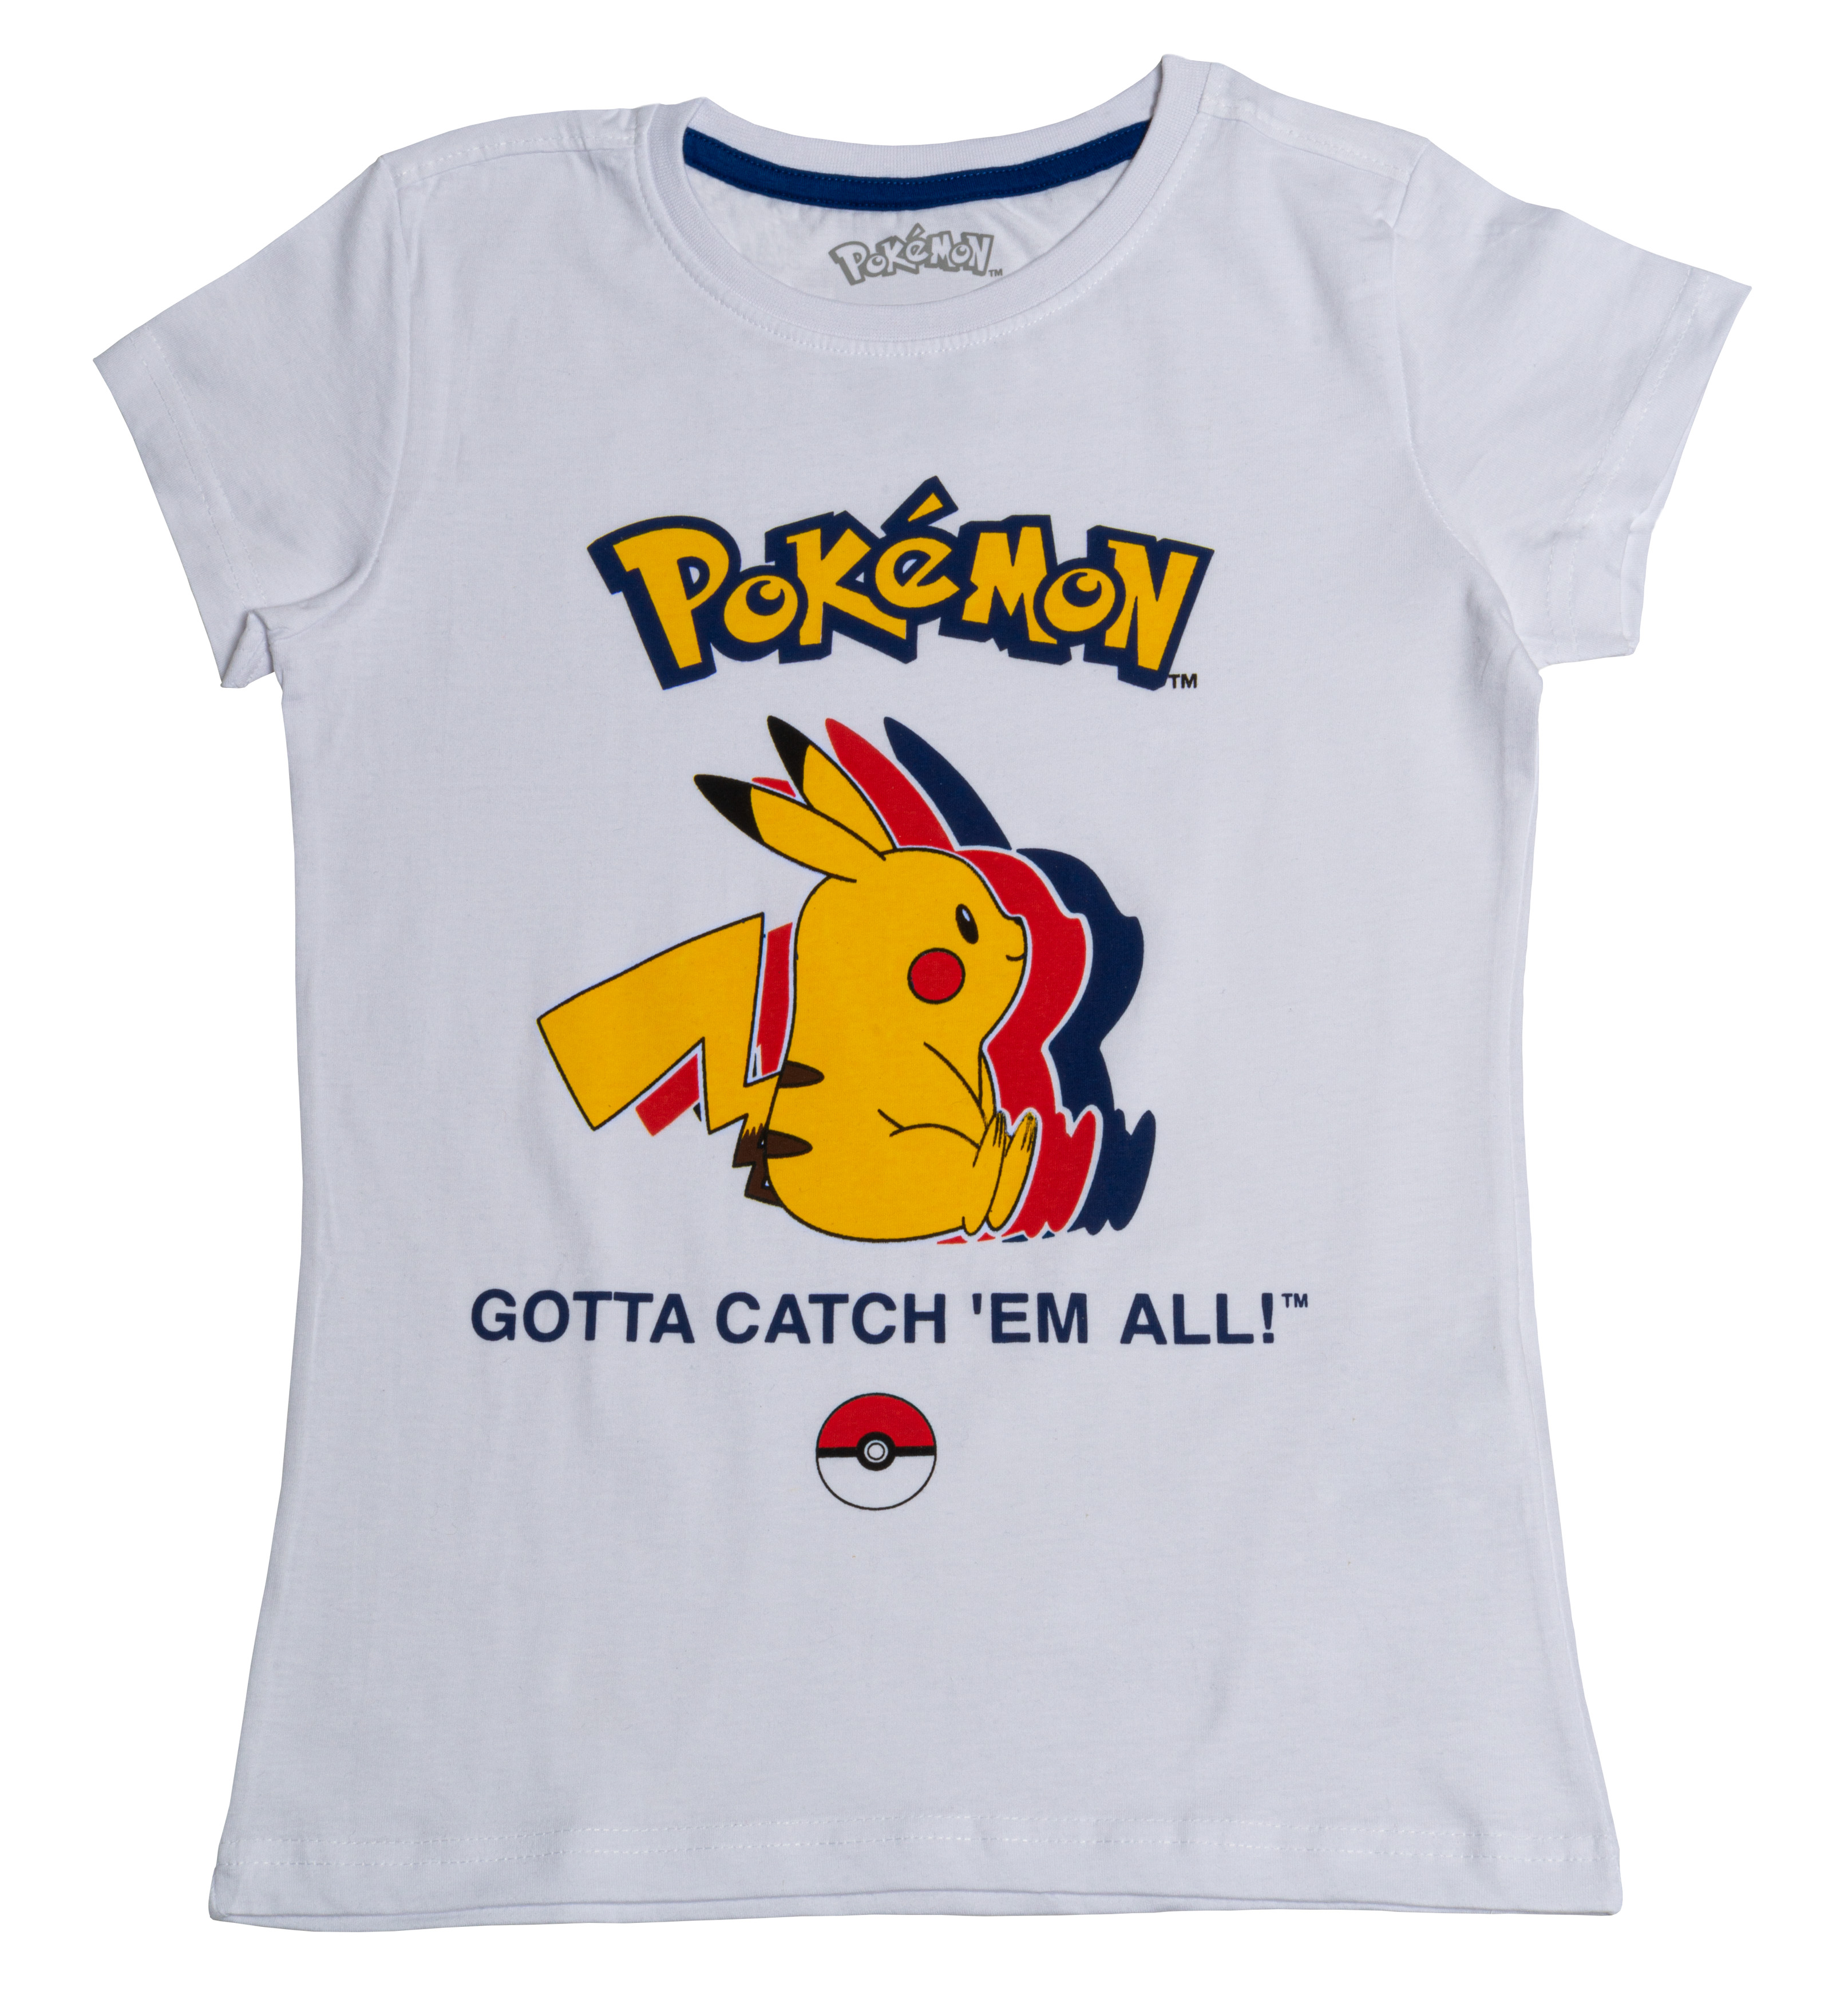 Pokémon - Pika Silhouette - Girls T-Shirt Gr. 146/152